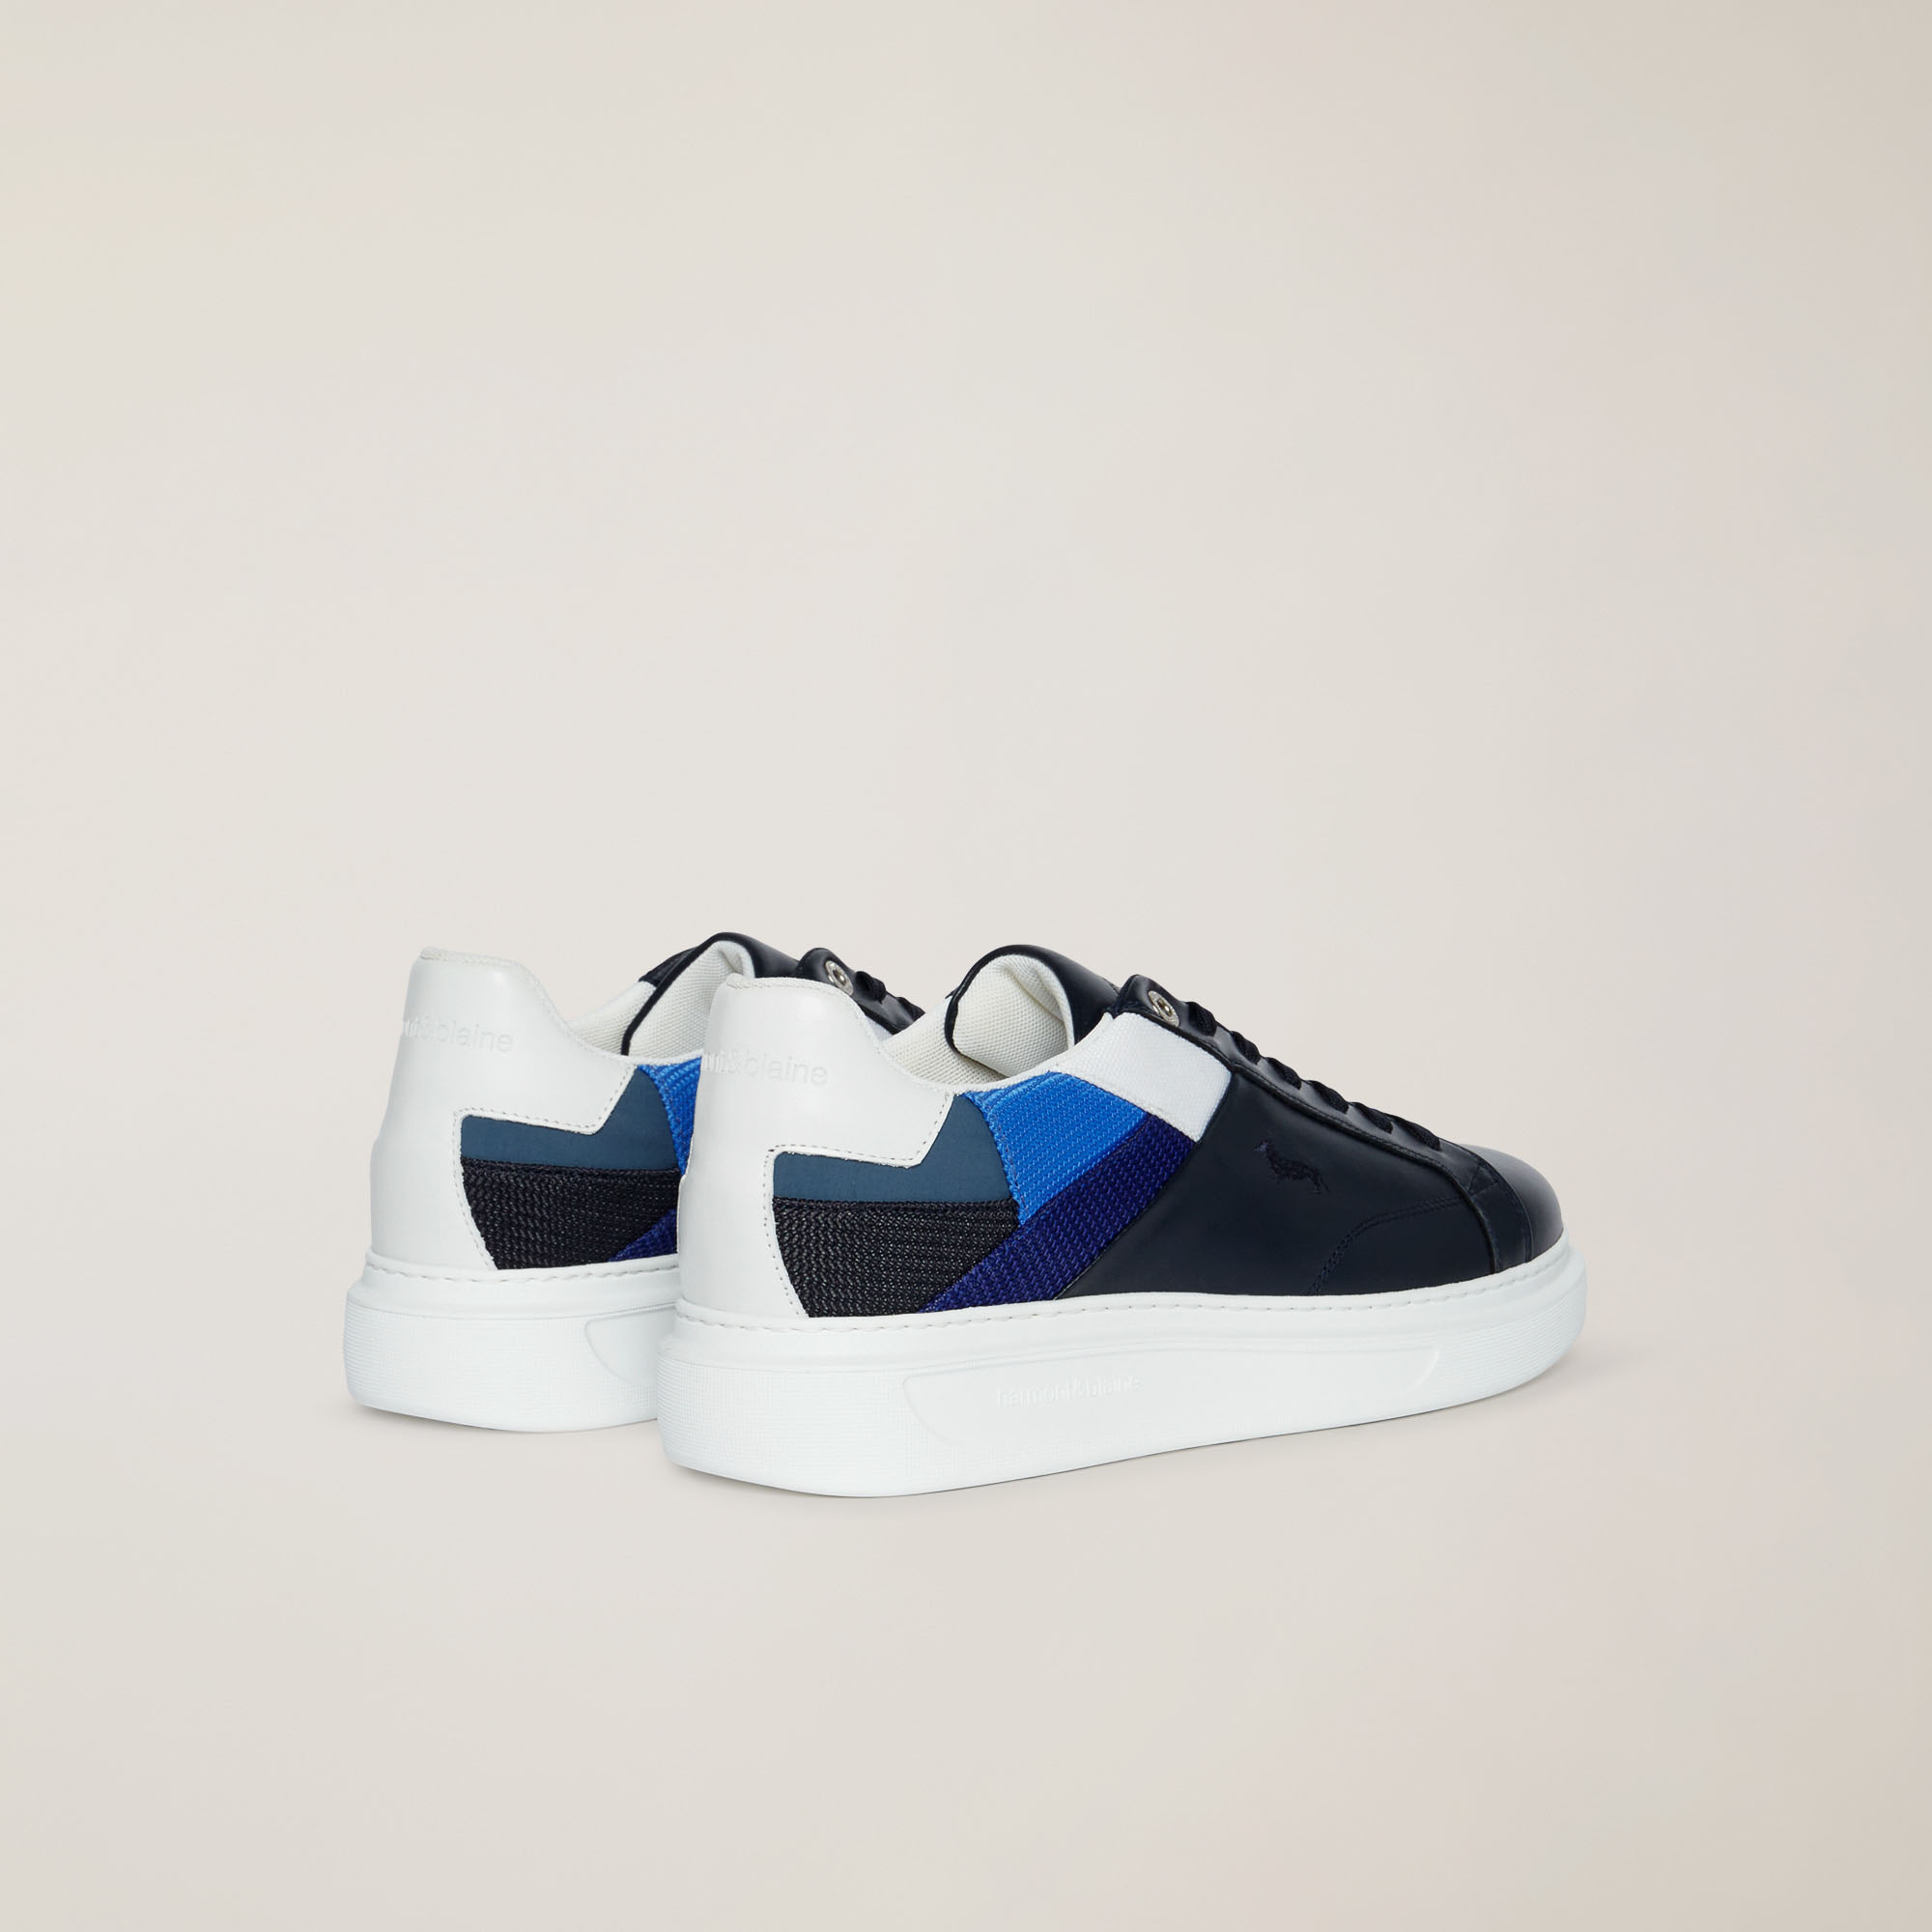 Sneaker mit Patchworkeinsätzen, Blau/Multicolor, large image number 2